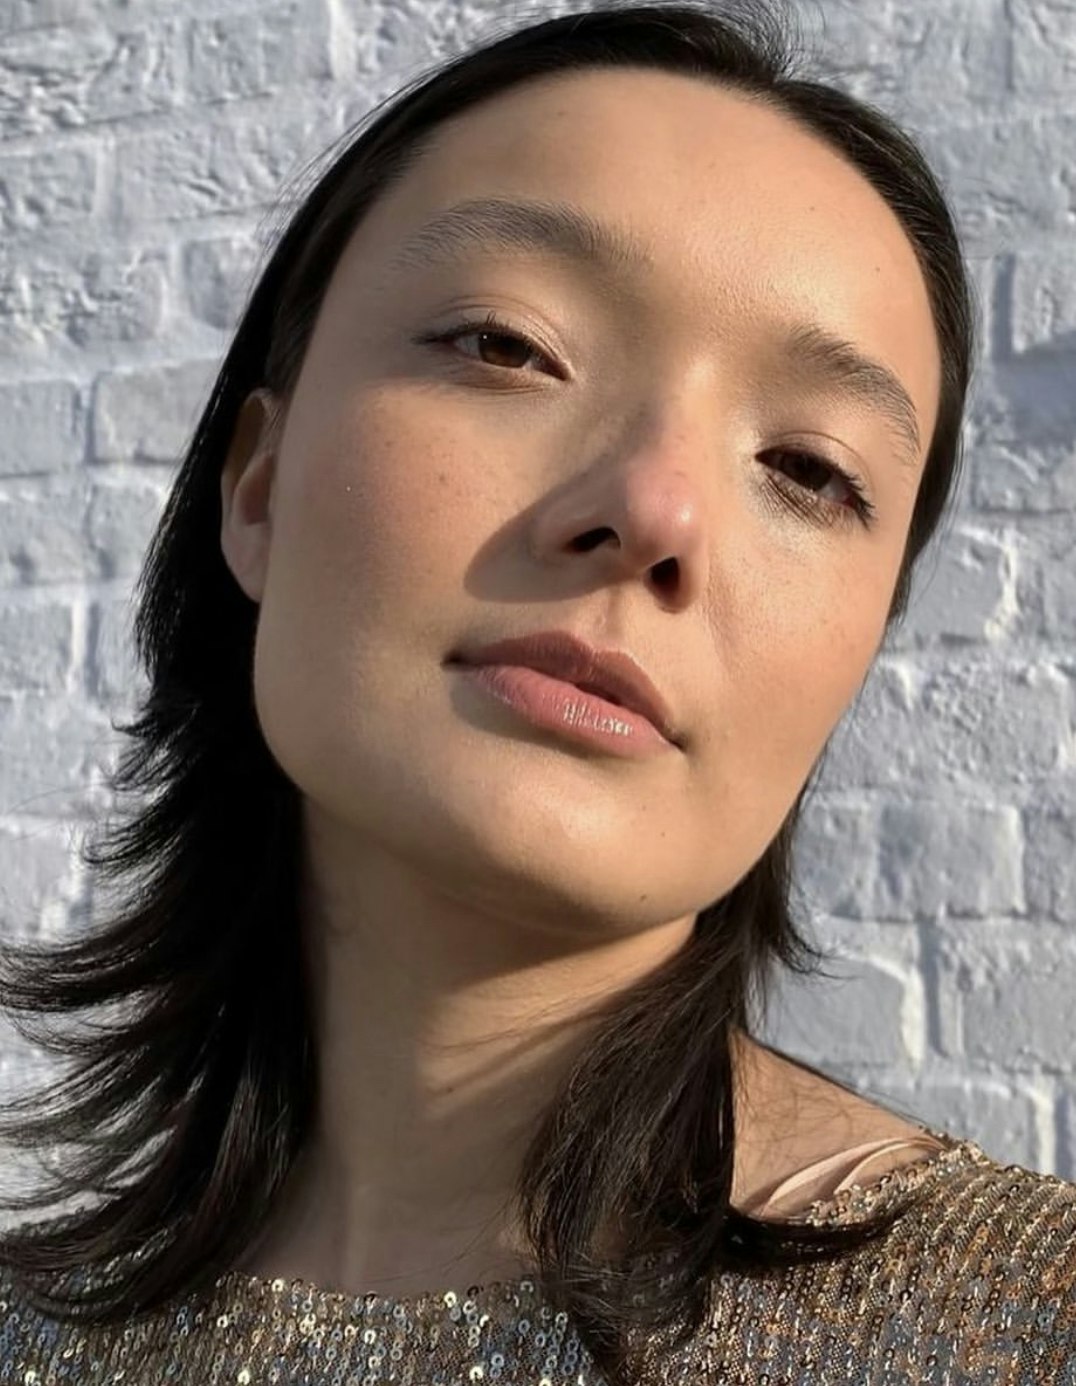 An image of Lena Li